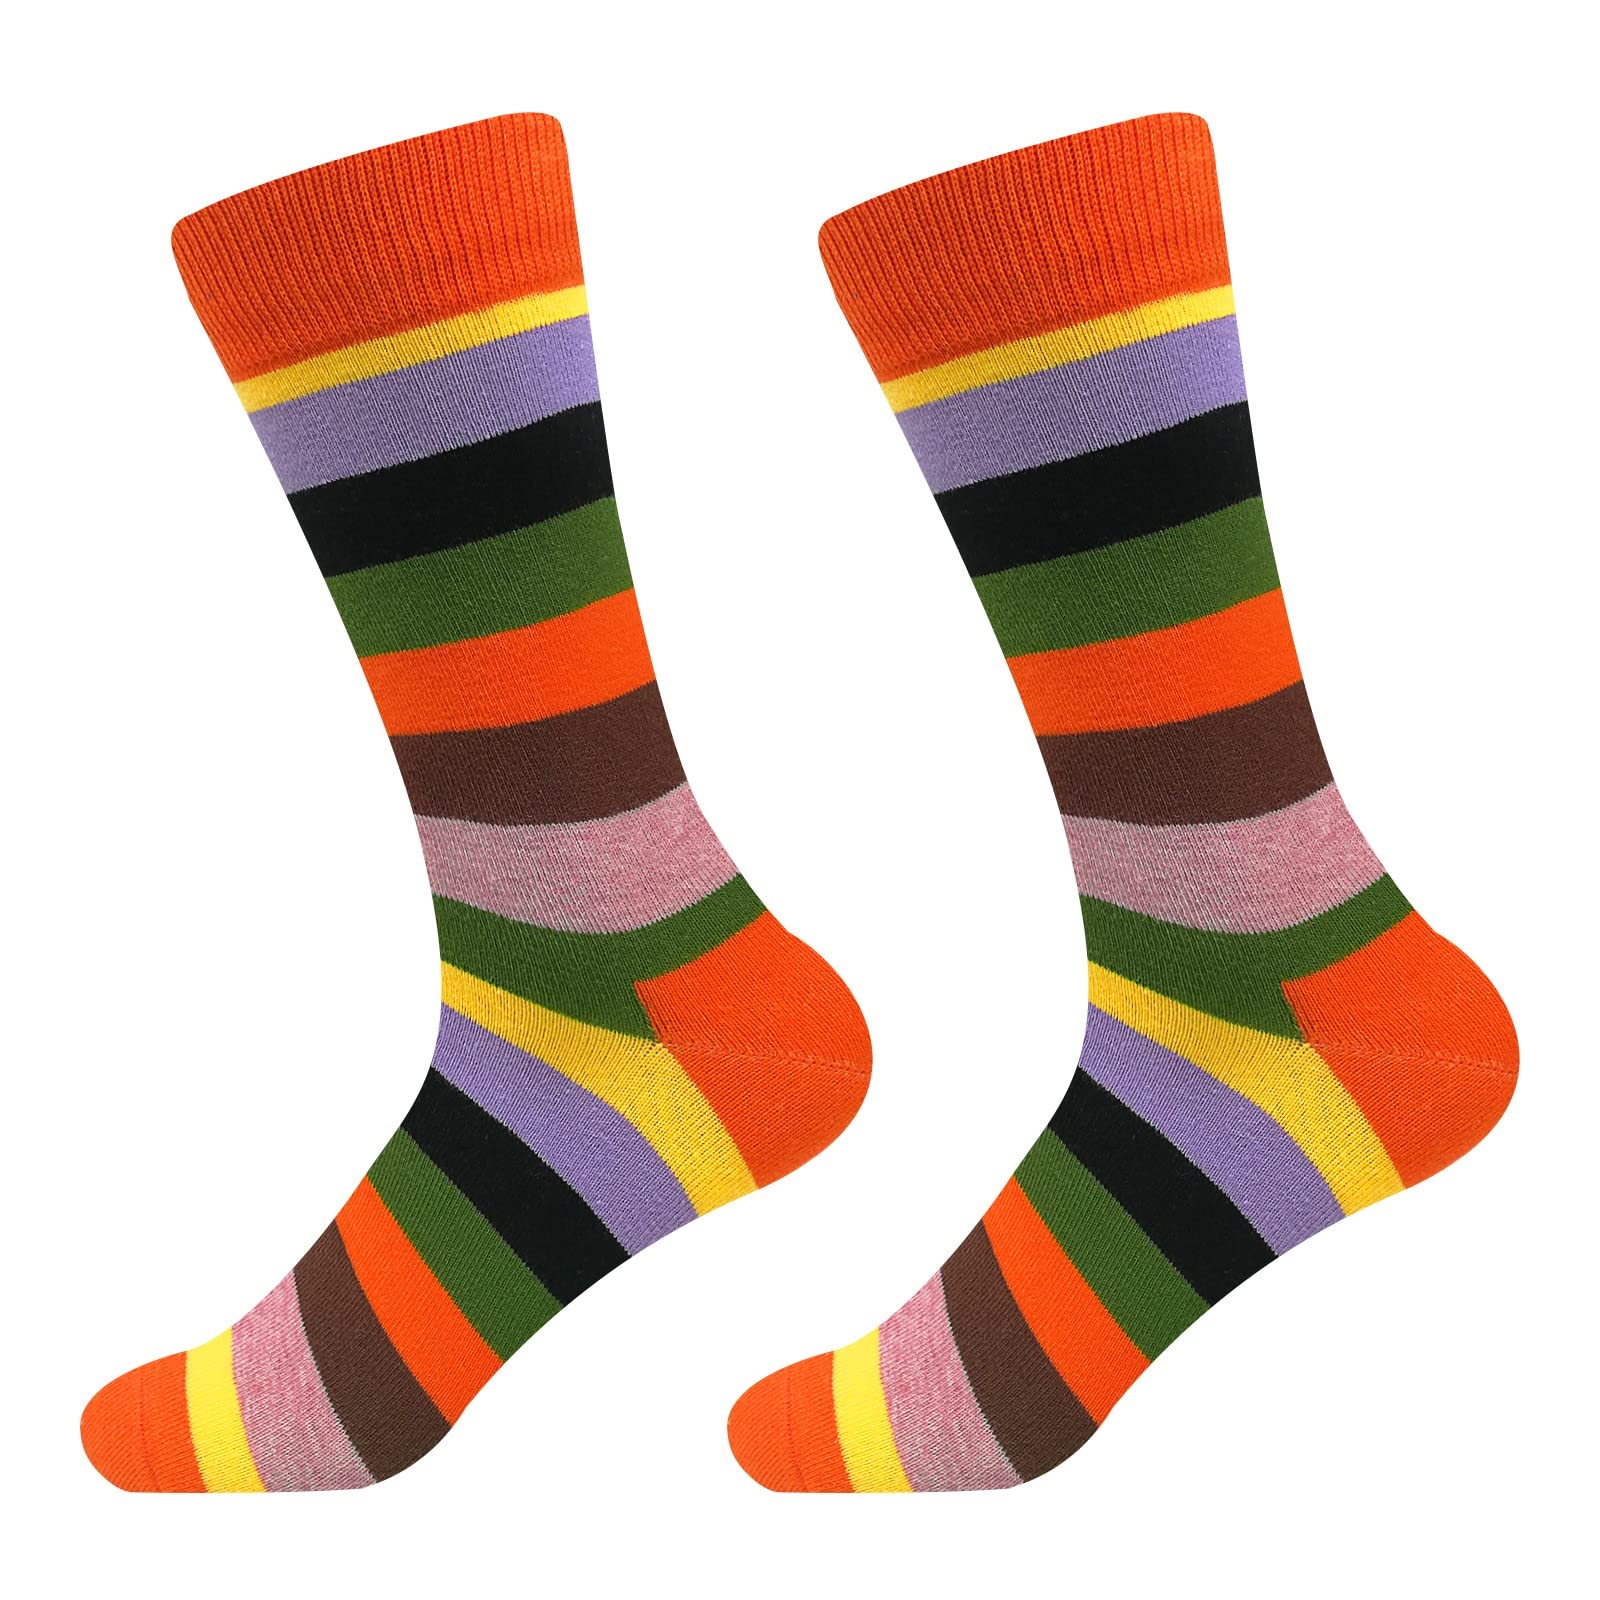 Fasefunn Men's Striped Socks Fun Colorful Novelty Crazy Patterned Dress Socks Cotton Calf Packs